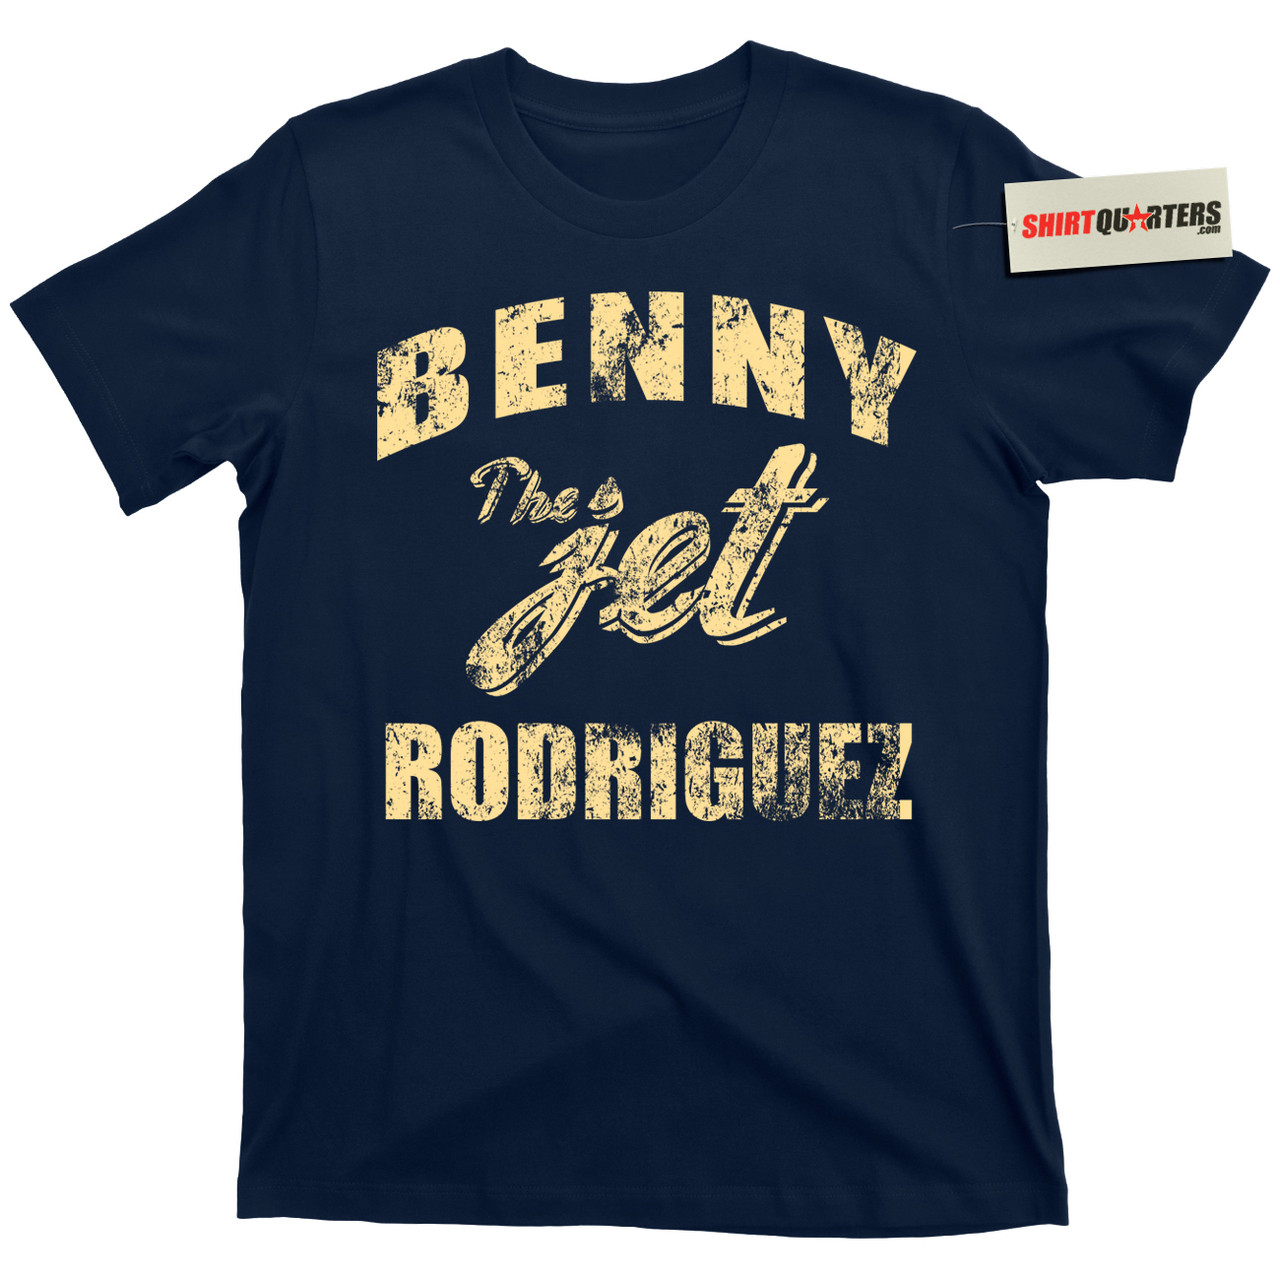 Shirts, Benny The Jet Rodriguez The Sandlot Jersey